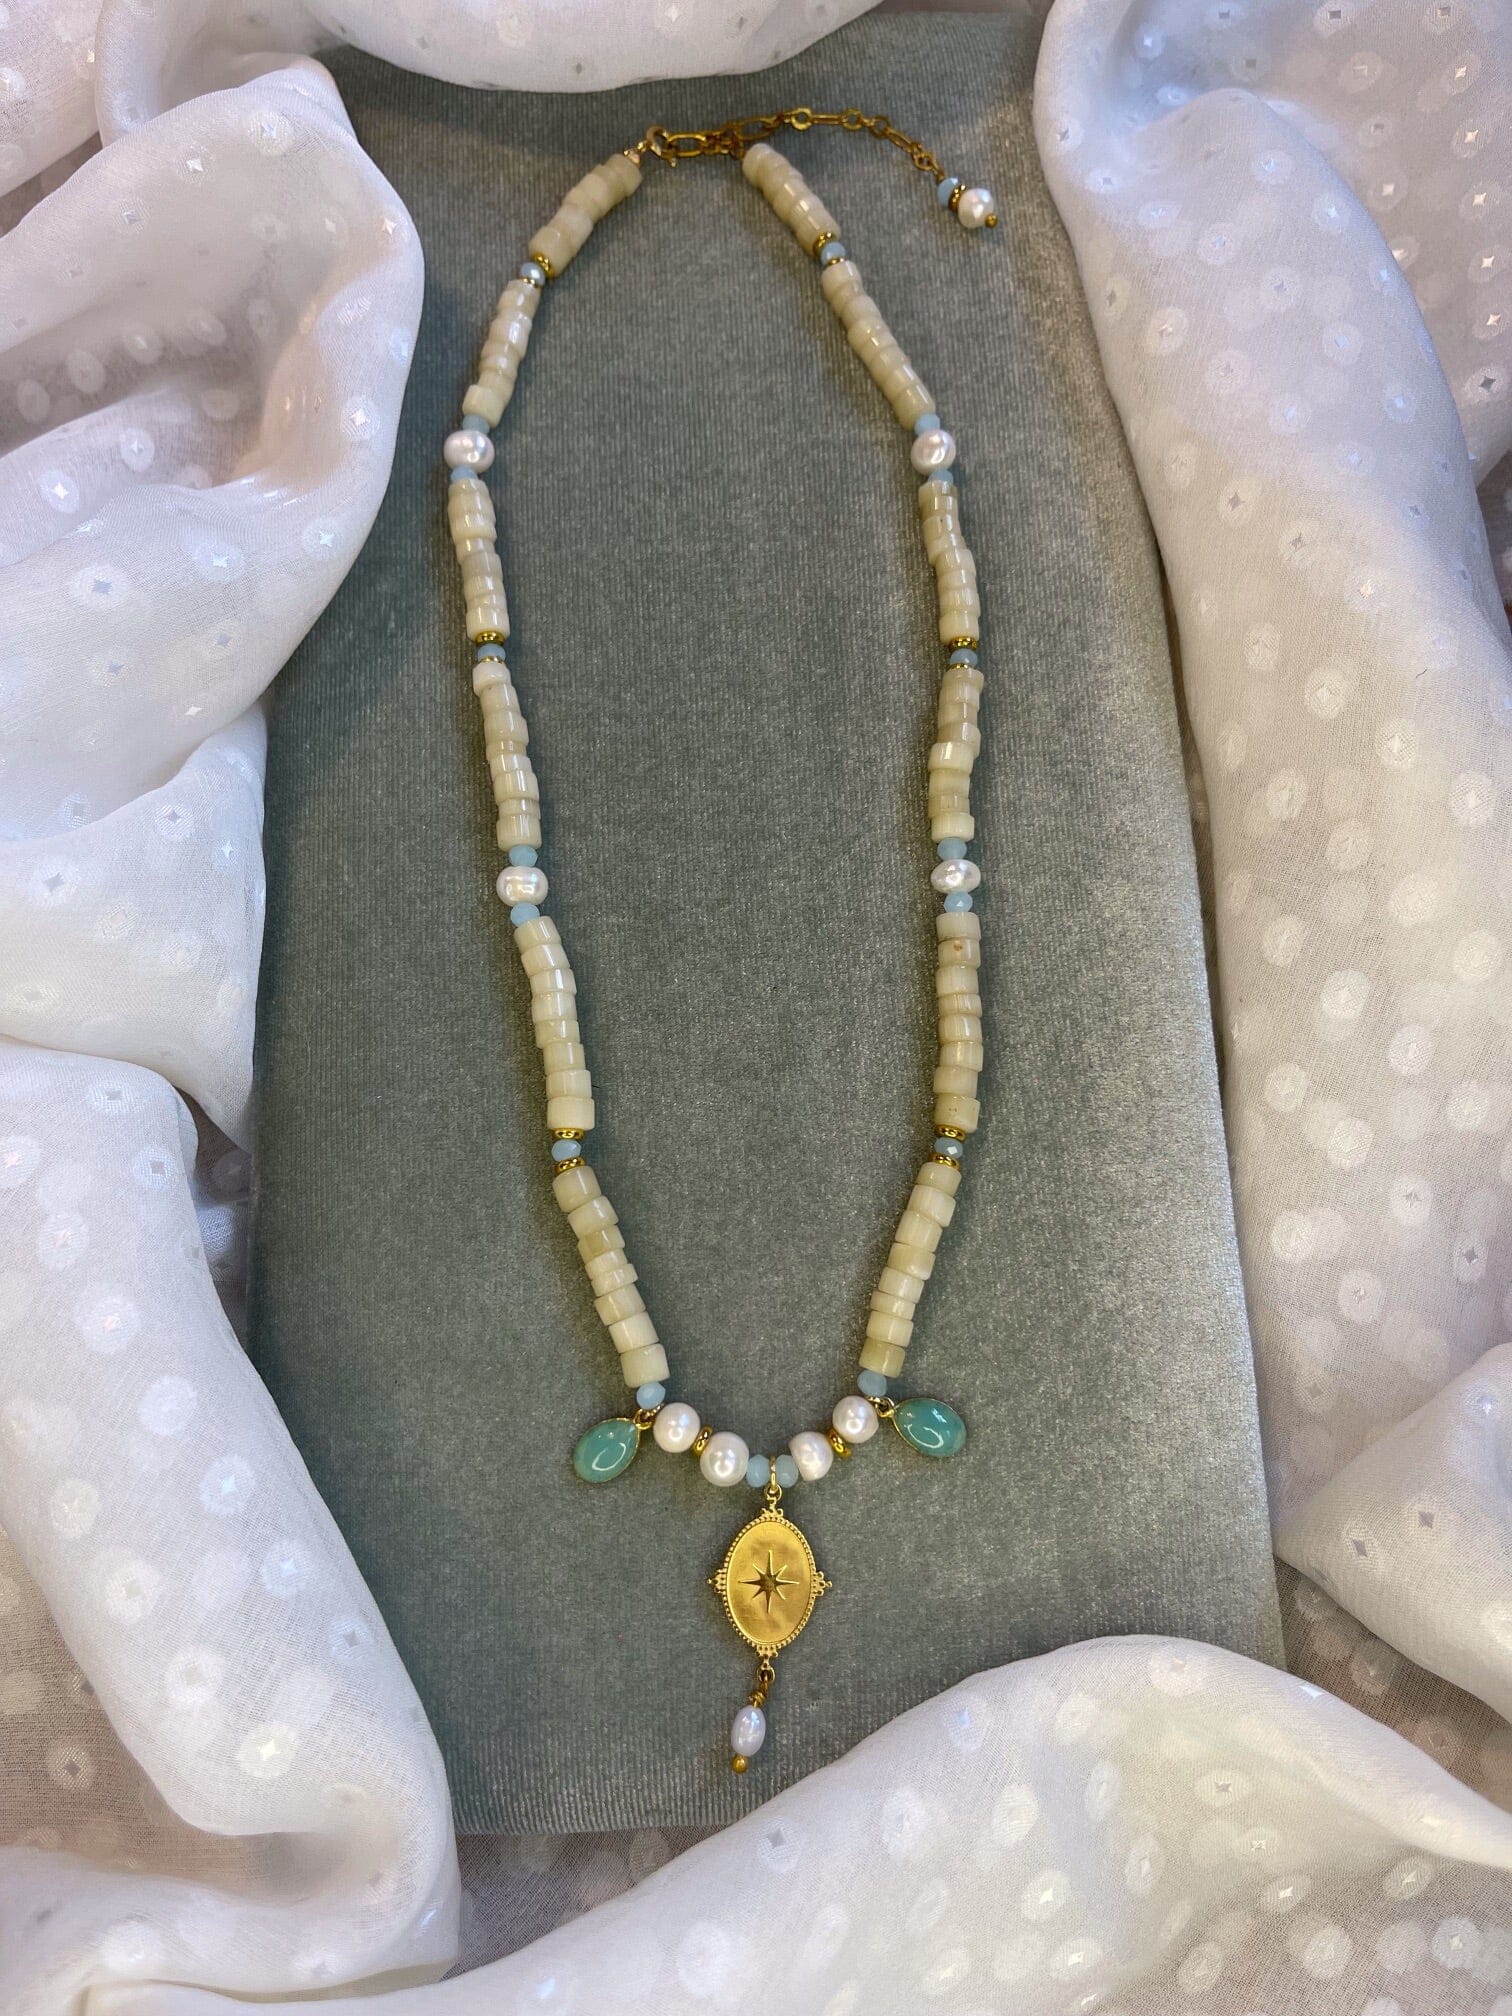  Nouveautés  new jewellery  necklace  jewellery  etoile  colliers  collier